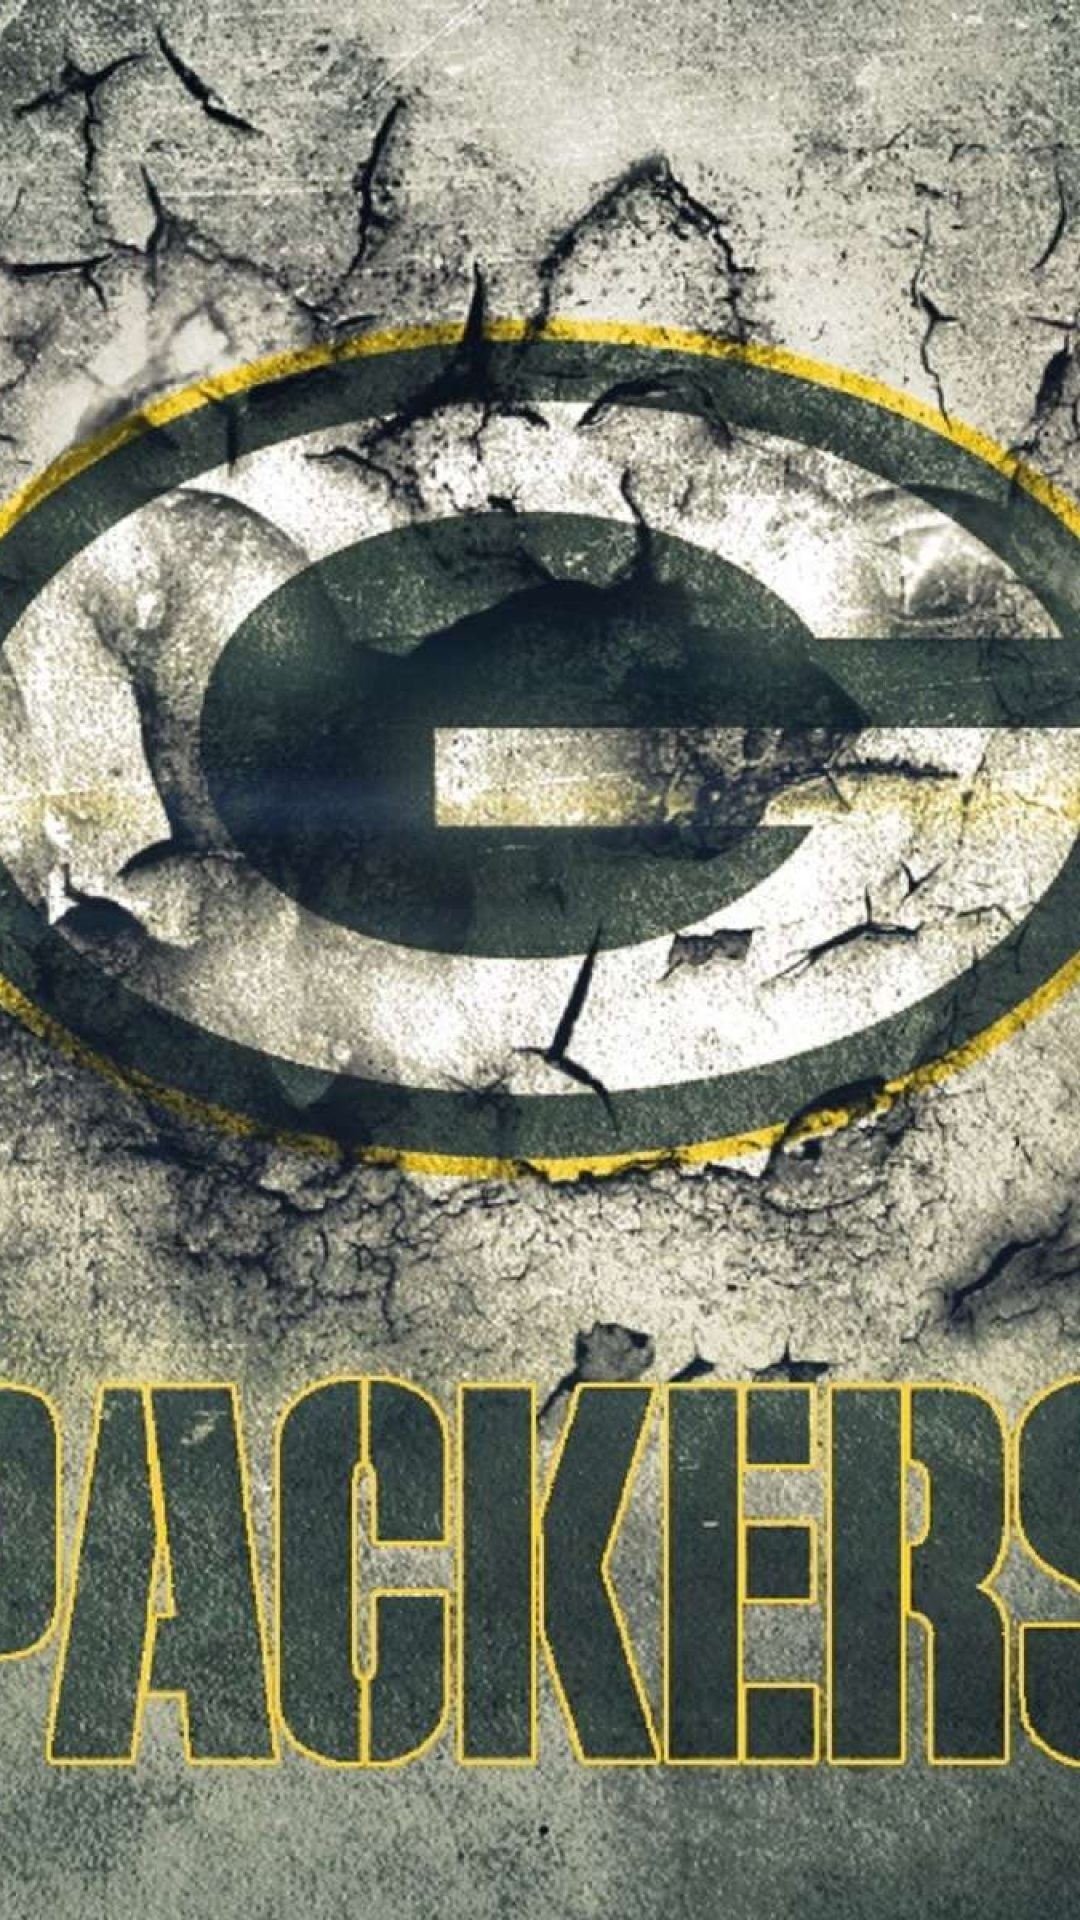 Wallpaper Green Bay Packers